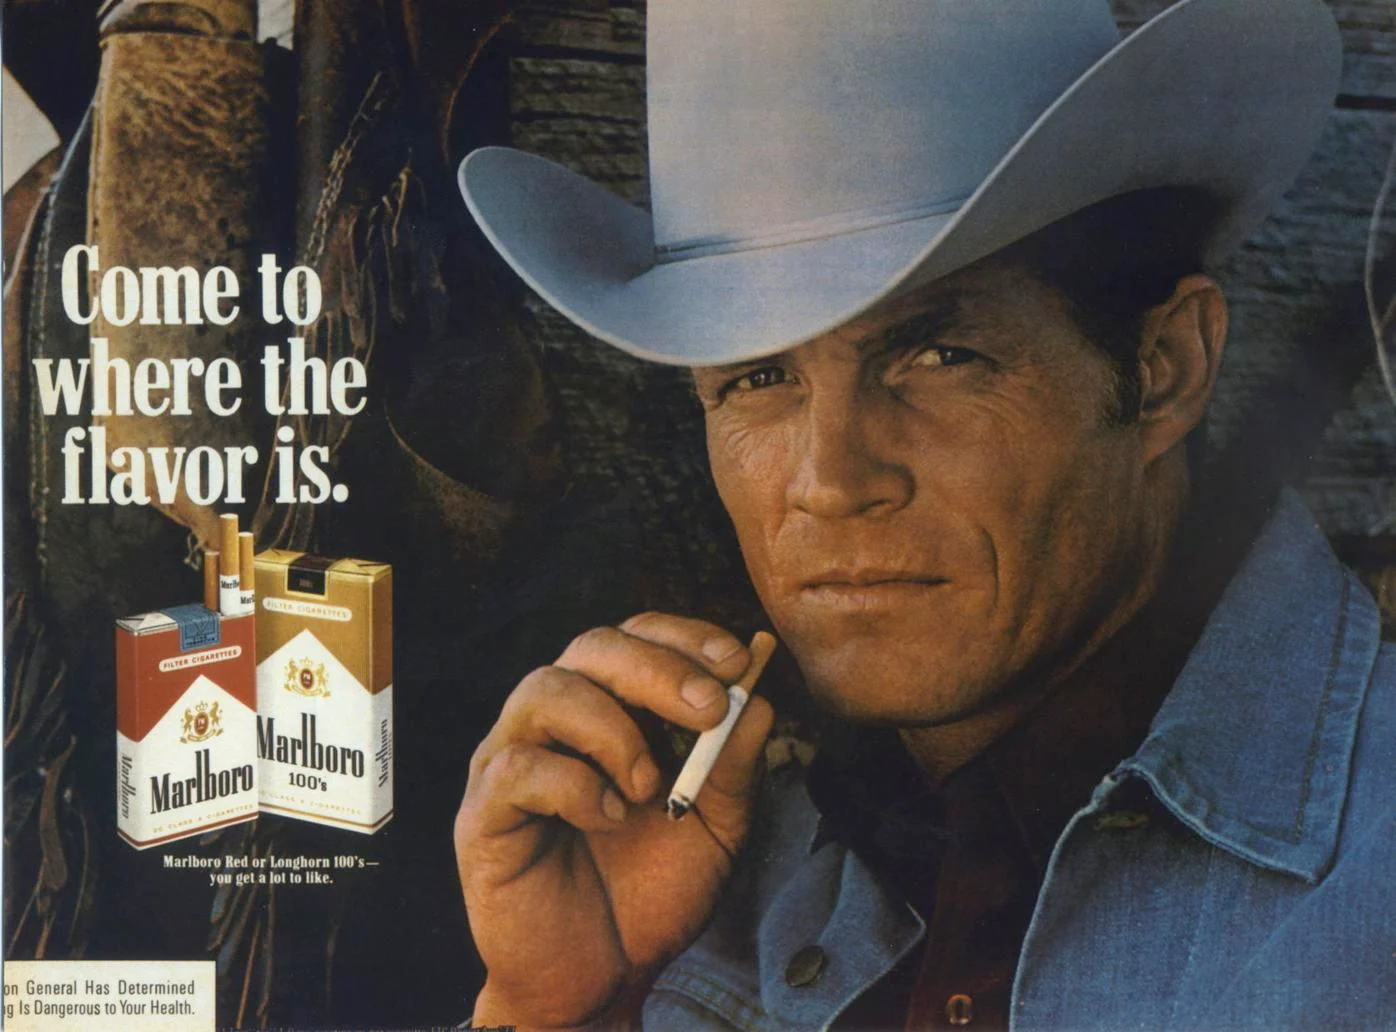 The Marlboro Man Phenomenon: How a Cowboy Redefined Cigarette Marketing in the 1950s